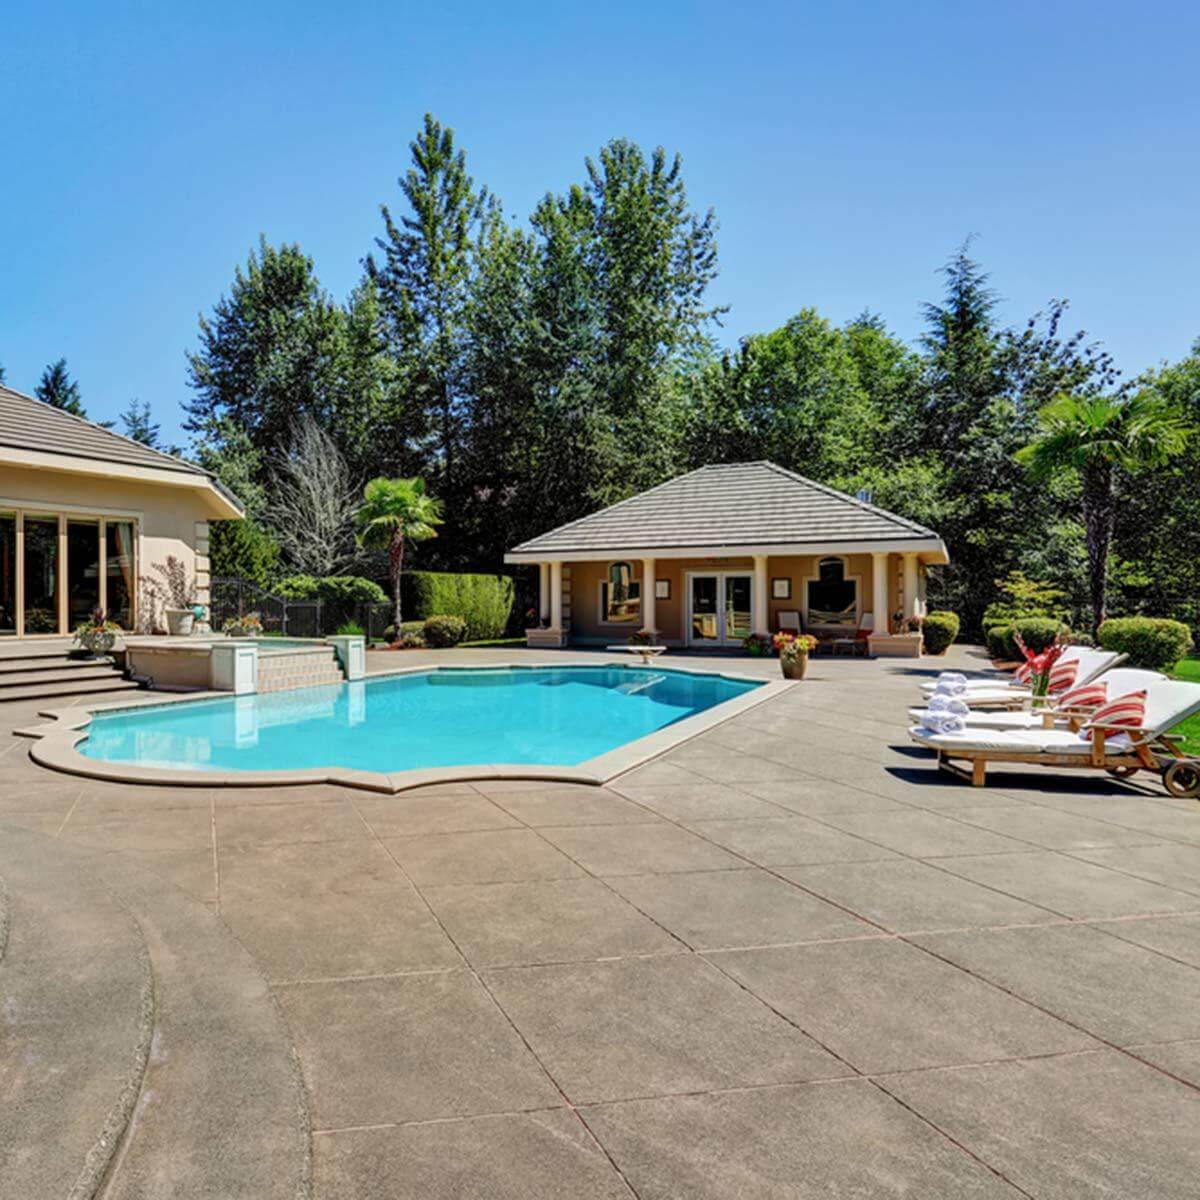  pool house designs